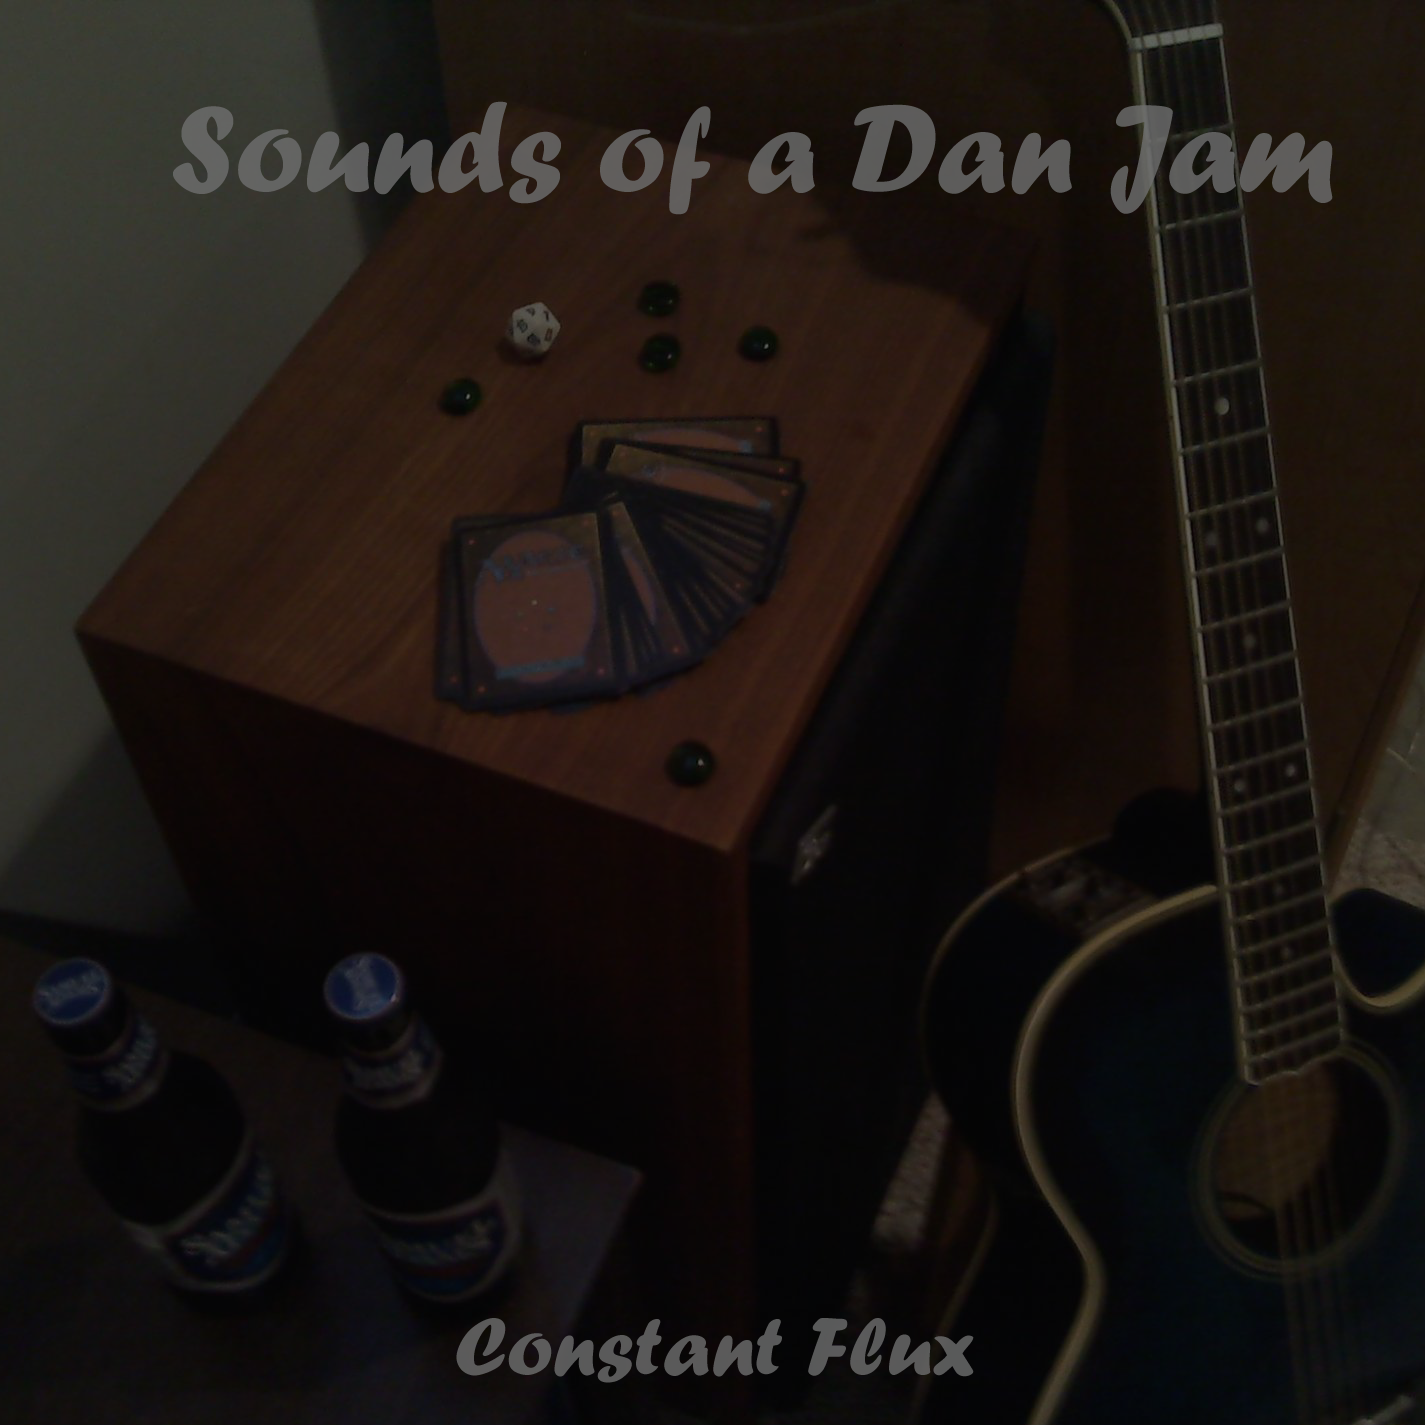 The album cover for Constant Flux's Sounds of a Dan Jam